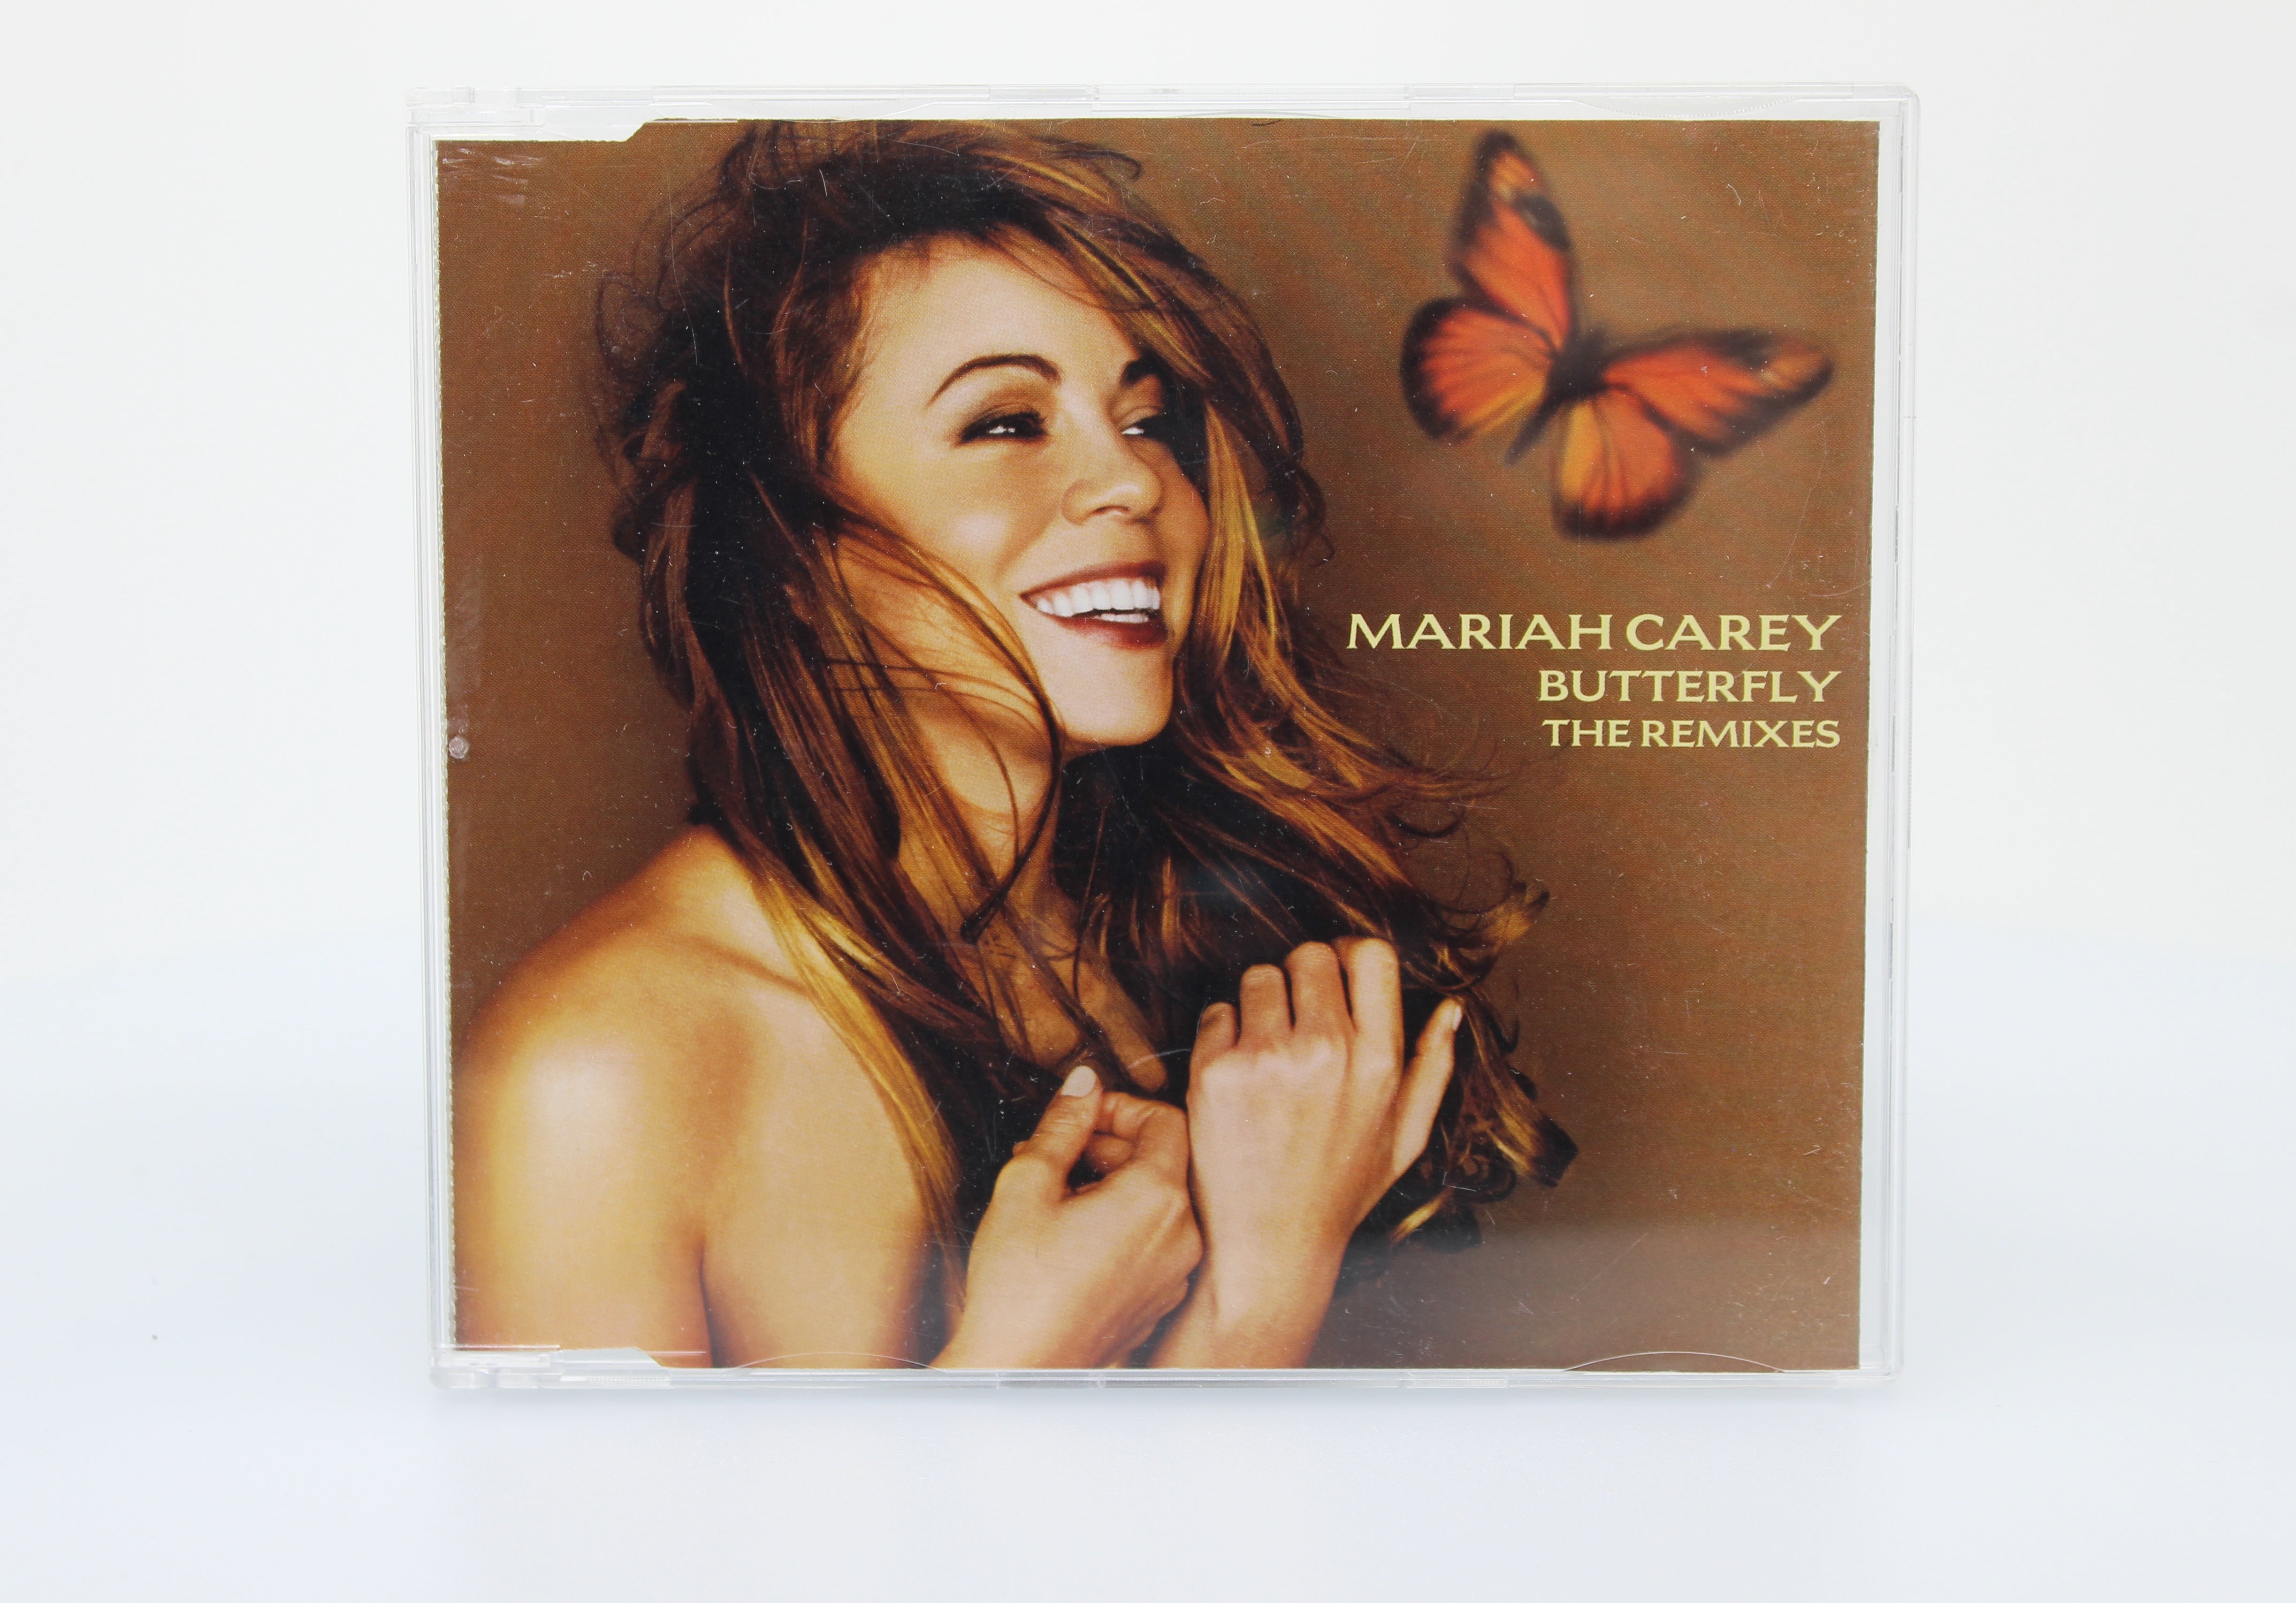 Mariah Carey, Butterfly (The Remixes), CD Single Promo, Mexico